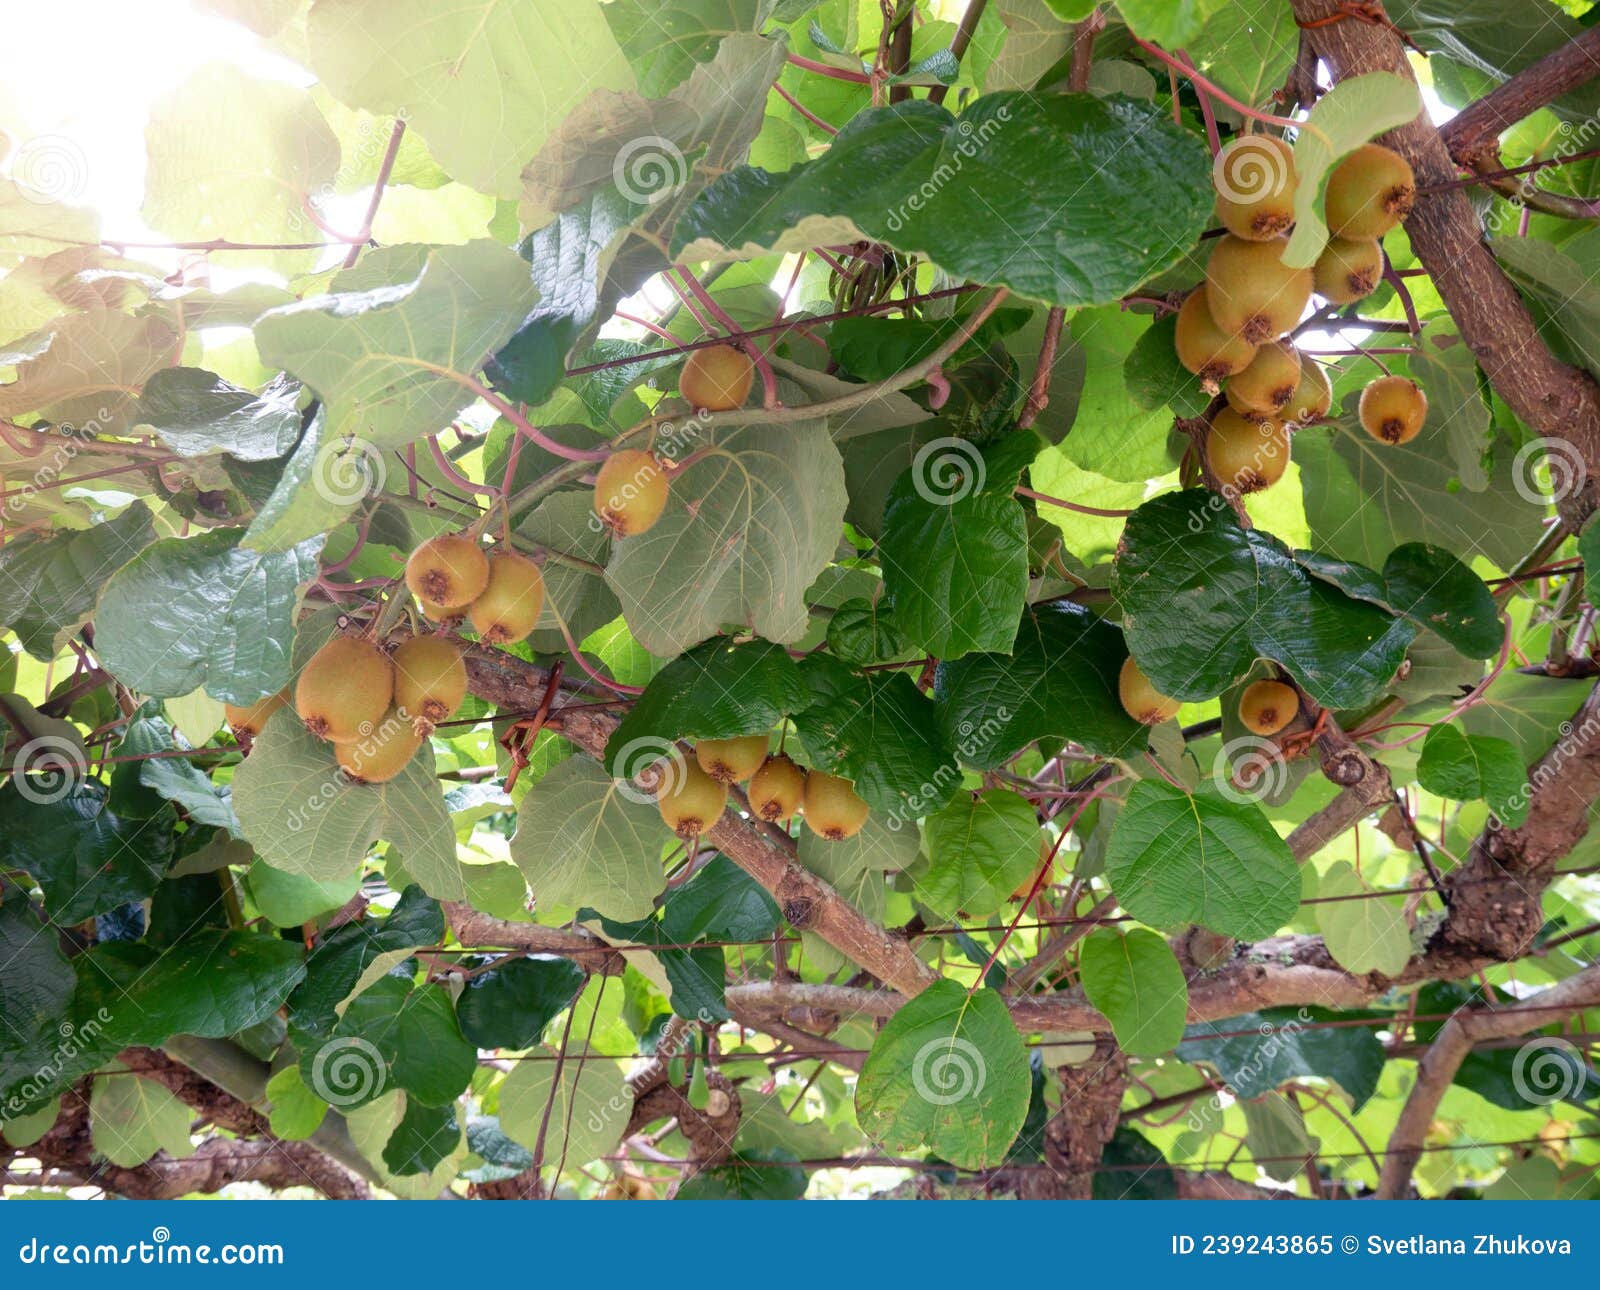 kiwi or kiwifruit branches with fruits at the plantation